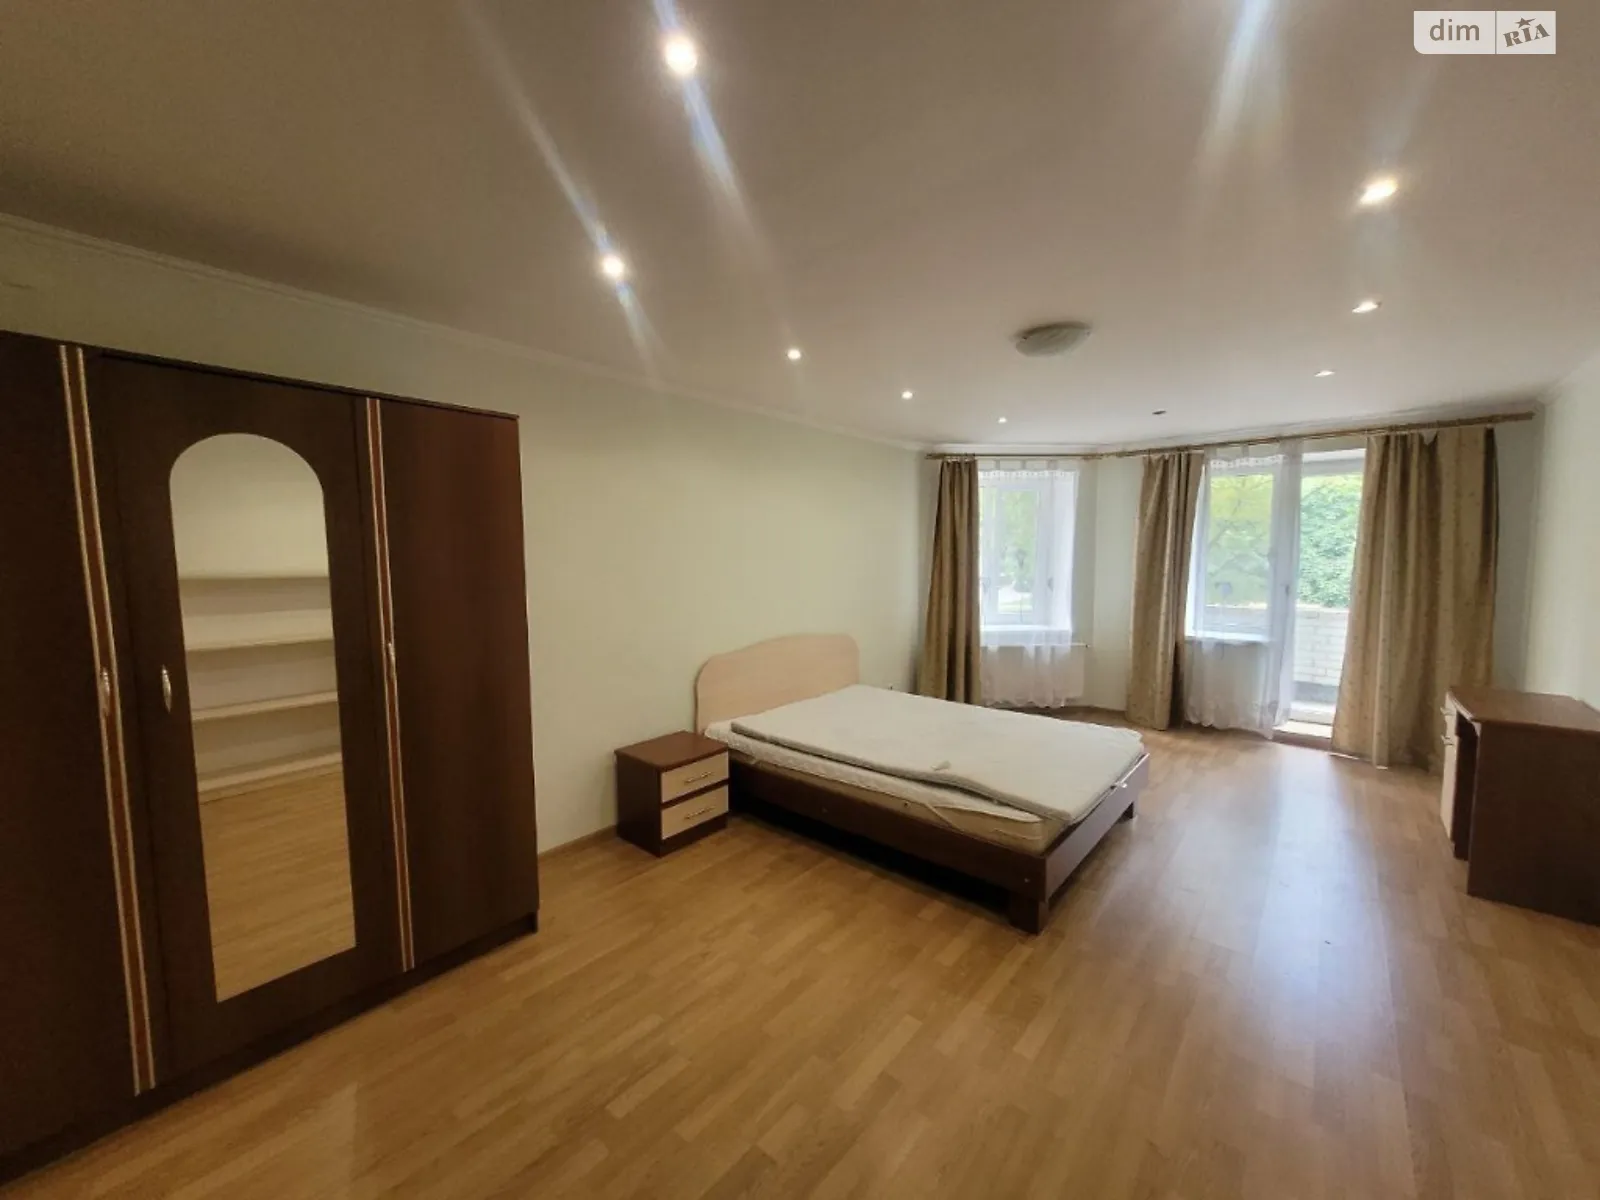 3-кімнатна квартира 93 кв. м у Тернополі, цена: 77000 $ - фото 1